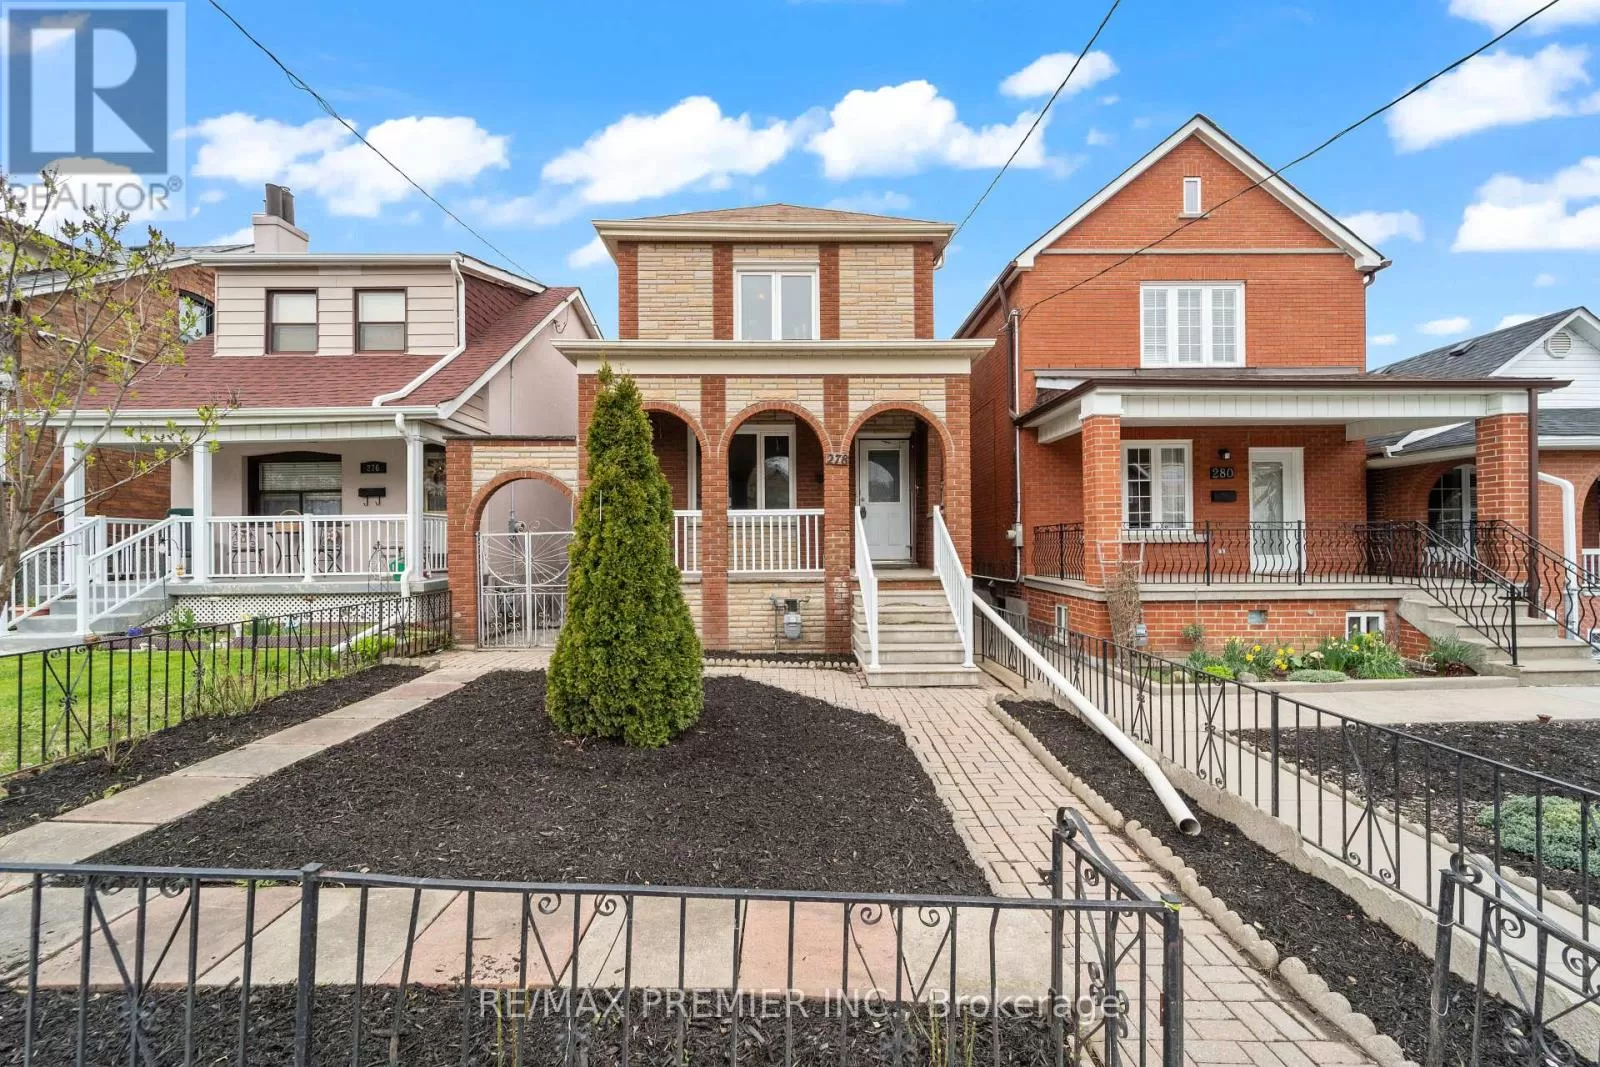 House for rent: 278 Mcroberts Avenue, Toronto, Ontario M6E 4P3